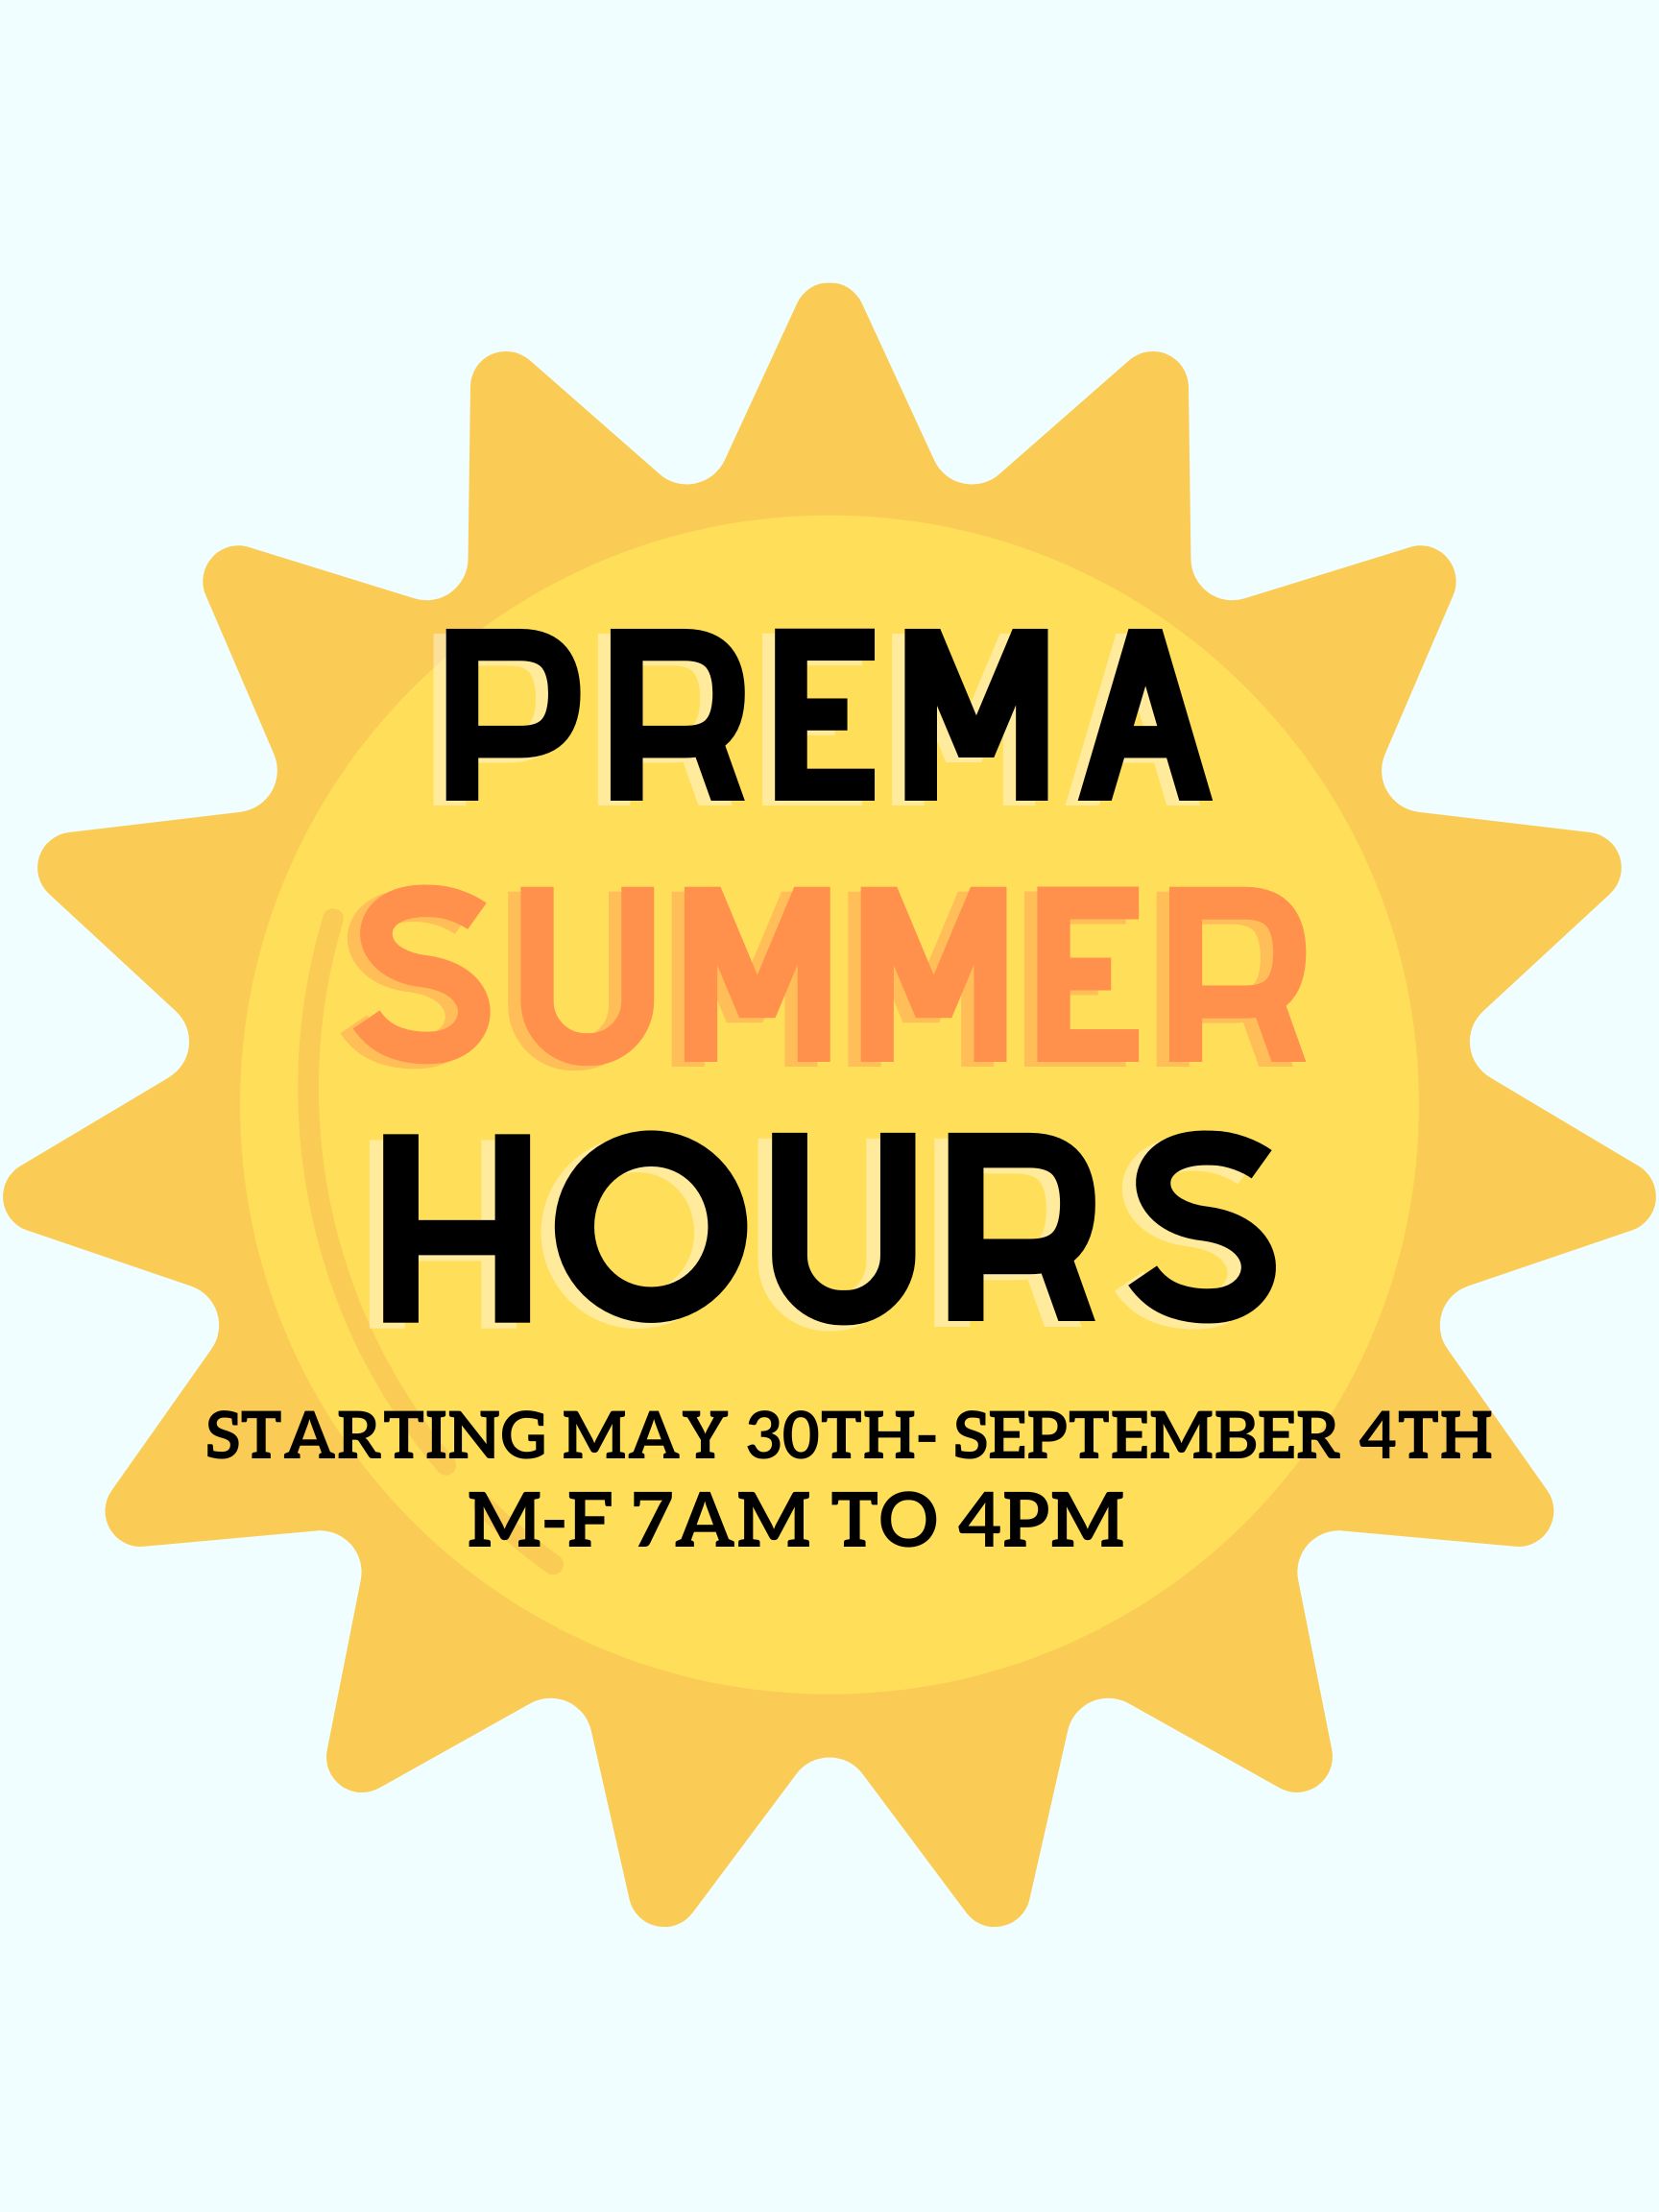 PREMA Summer Hours of Operation